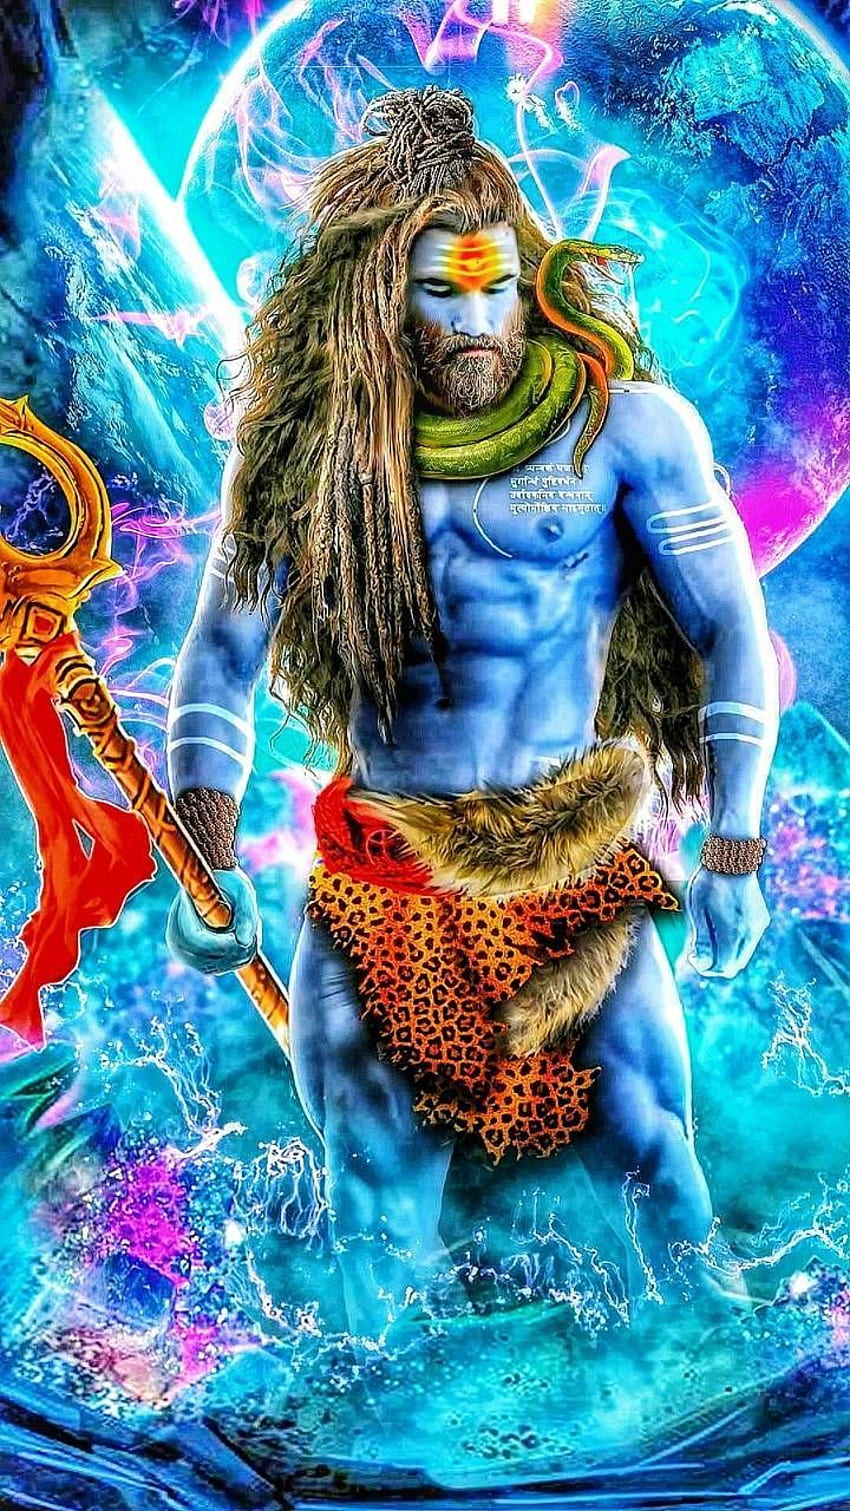 Lord Shiva Gif Images - Wordzz